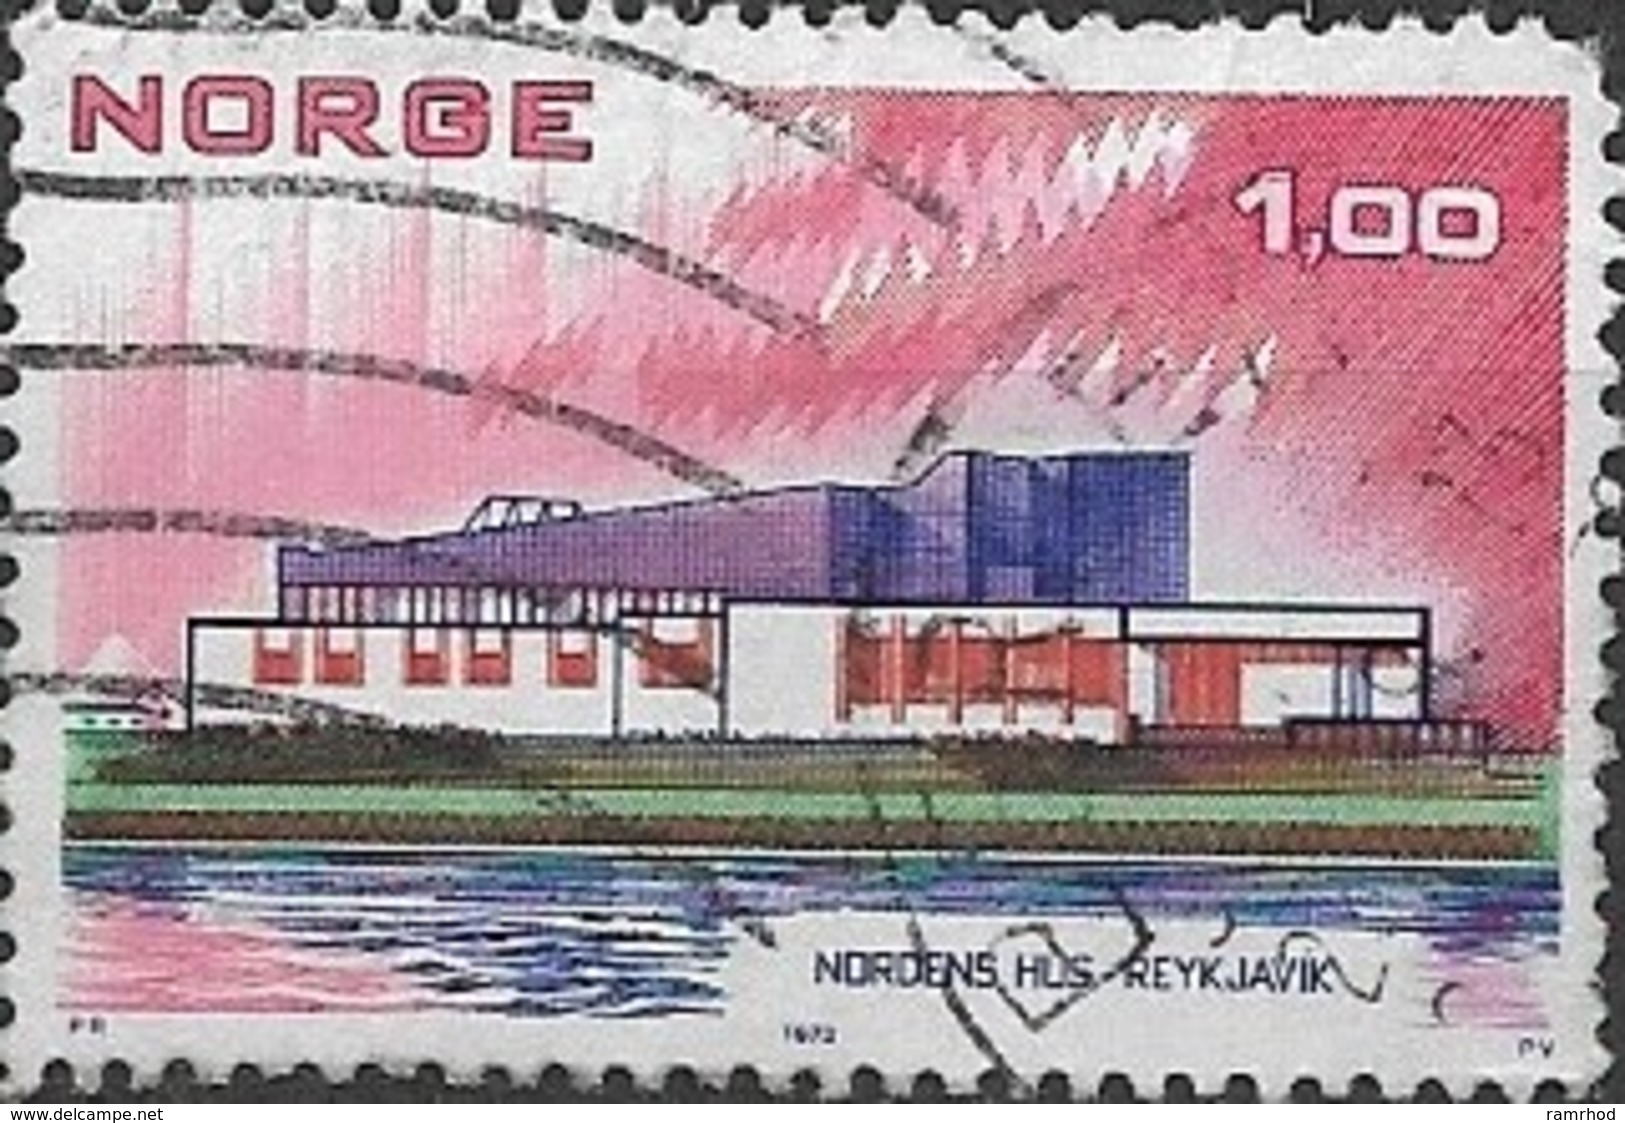 NORWAY 1973 Nordic Countries' Postal Co-operation - 1k The Nordic House, Reykjavik FU - Gebraucht